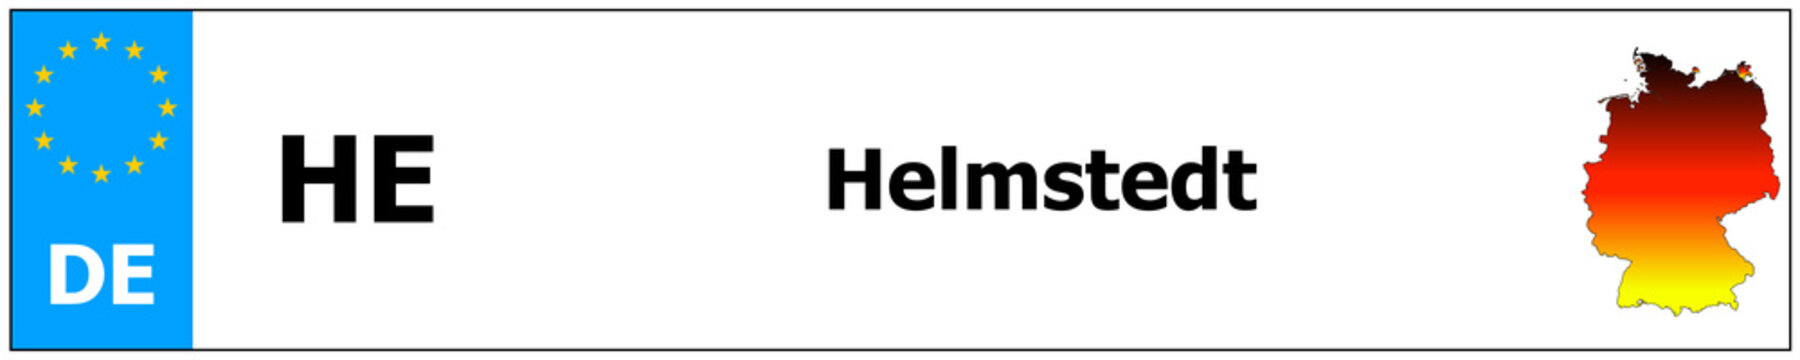 Helmstedt car licence plate sticker name and map of Germany. Vehicle registration plates frames German number